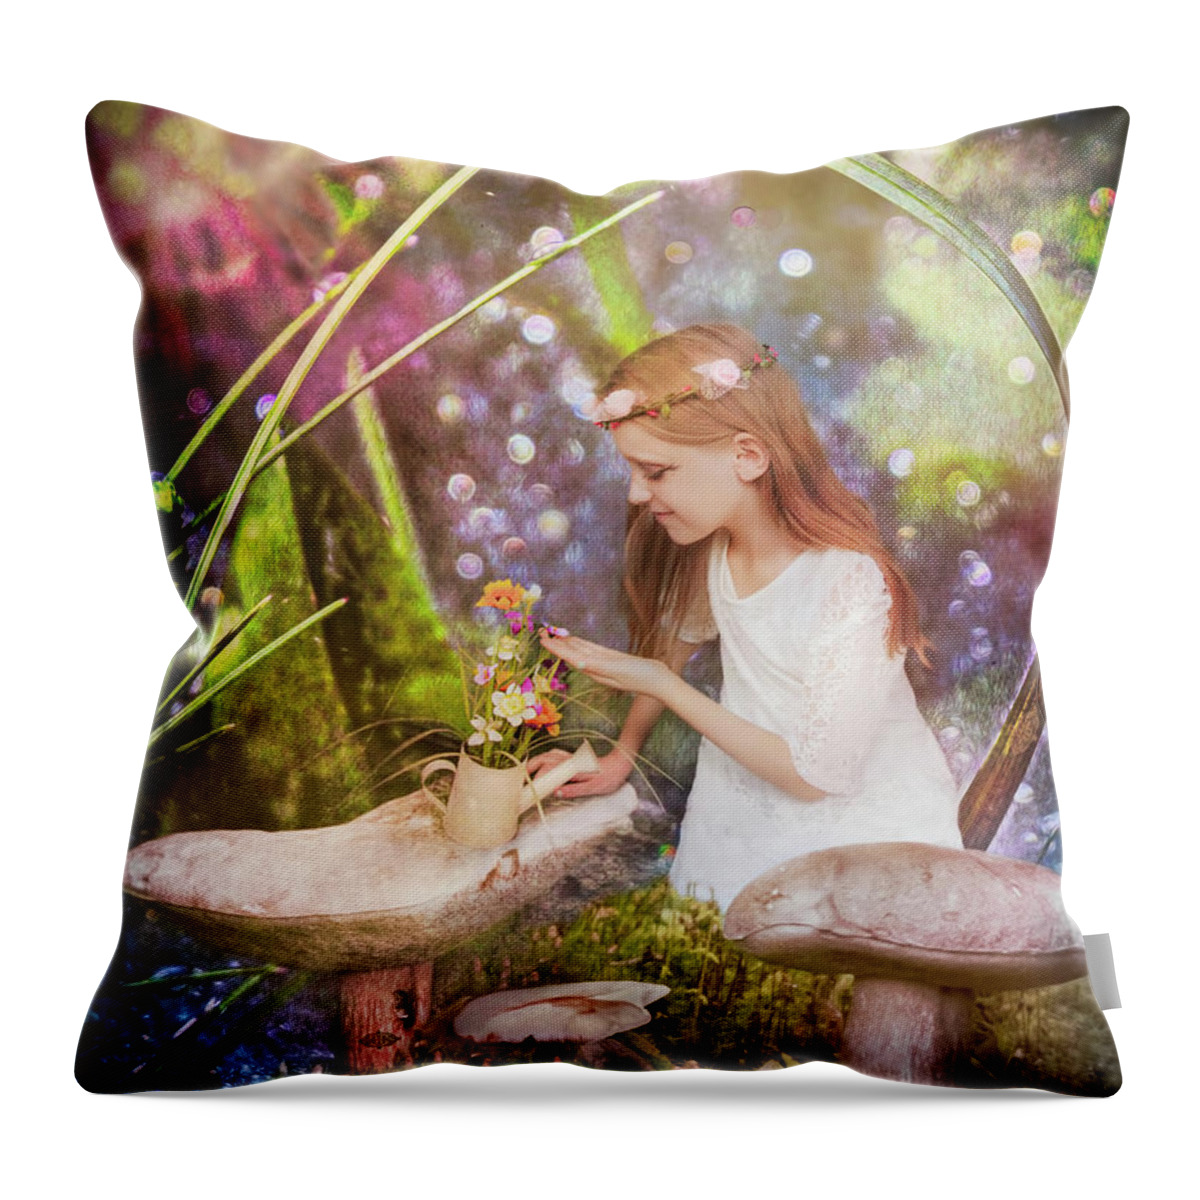 Magical Throw Pillow featuring the photograph Magical Mushroom Garden by Shara Abel